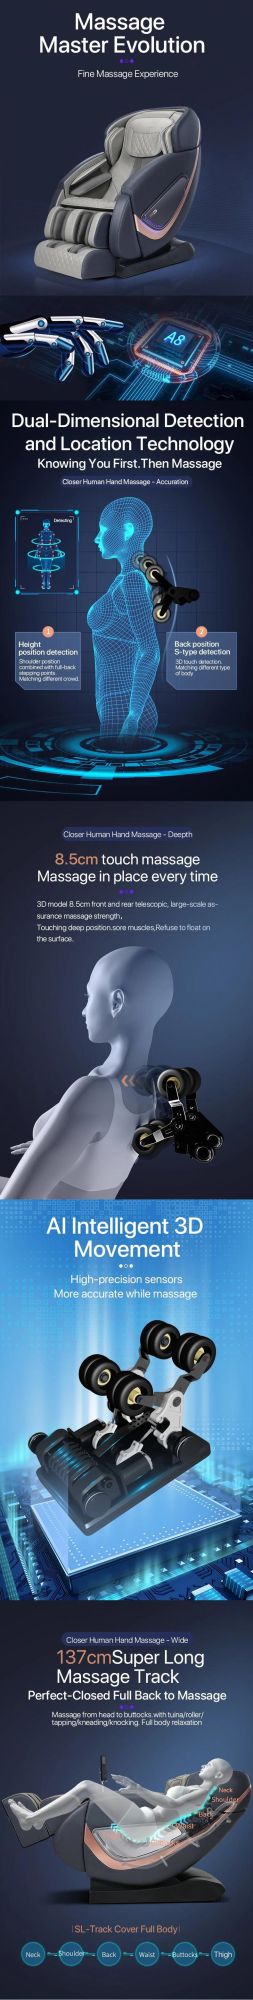 Factory Electric Shiatsu 3D Zero Gravity Commercial Relax Massage Chair